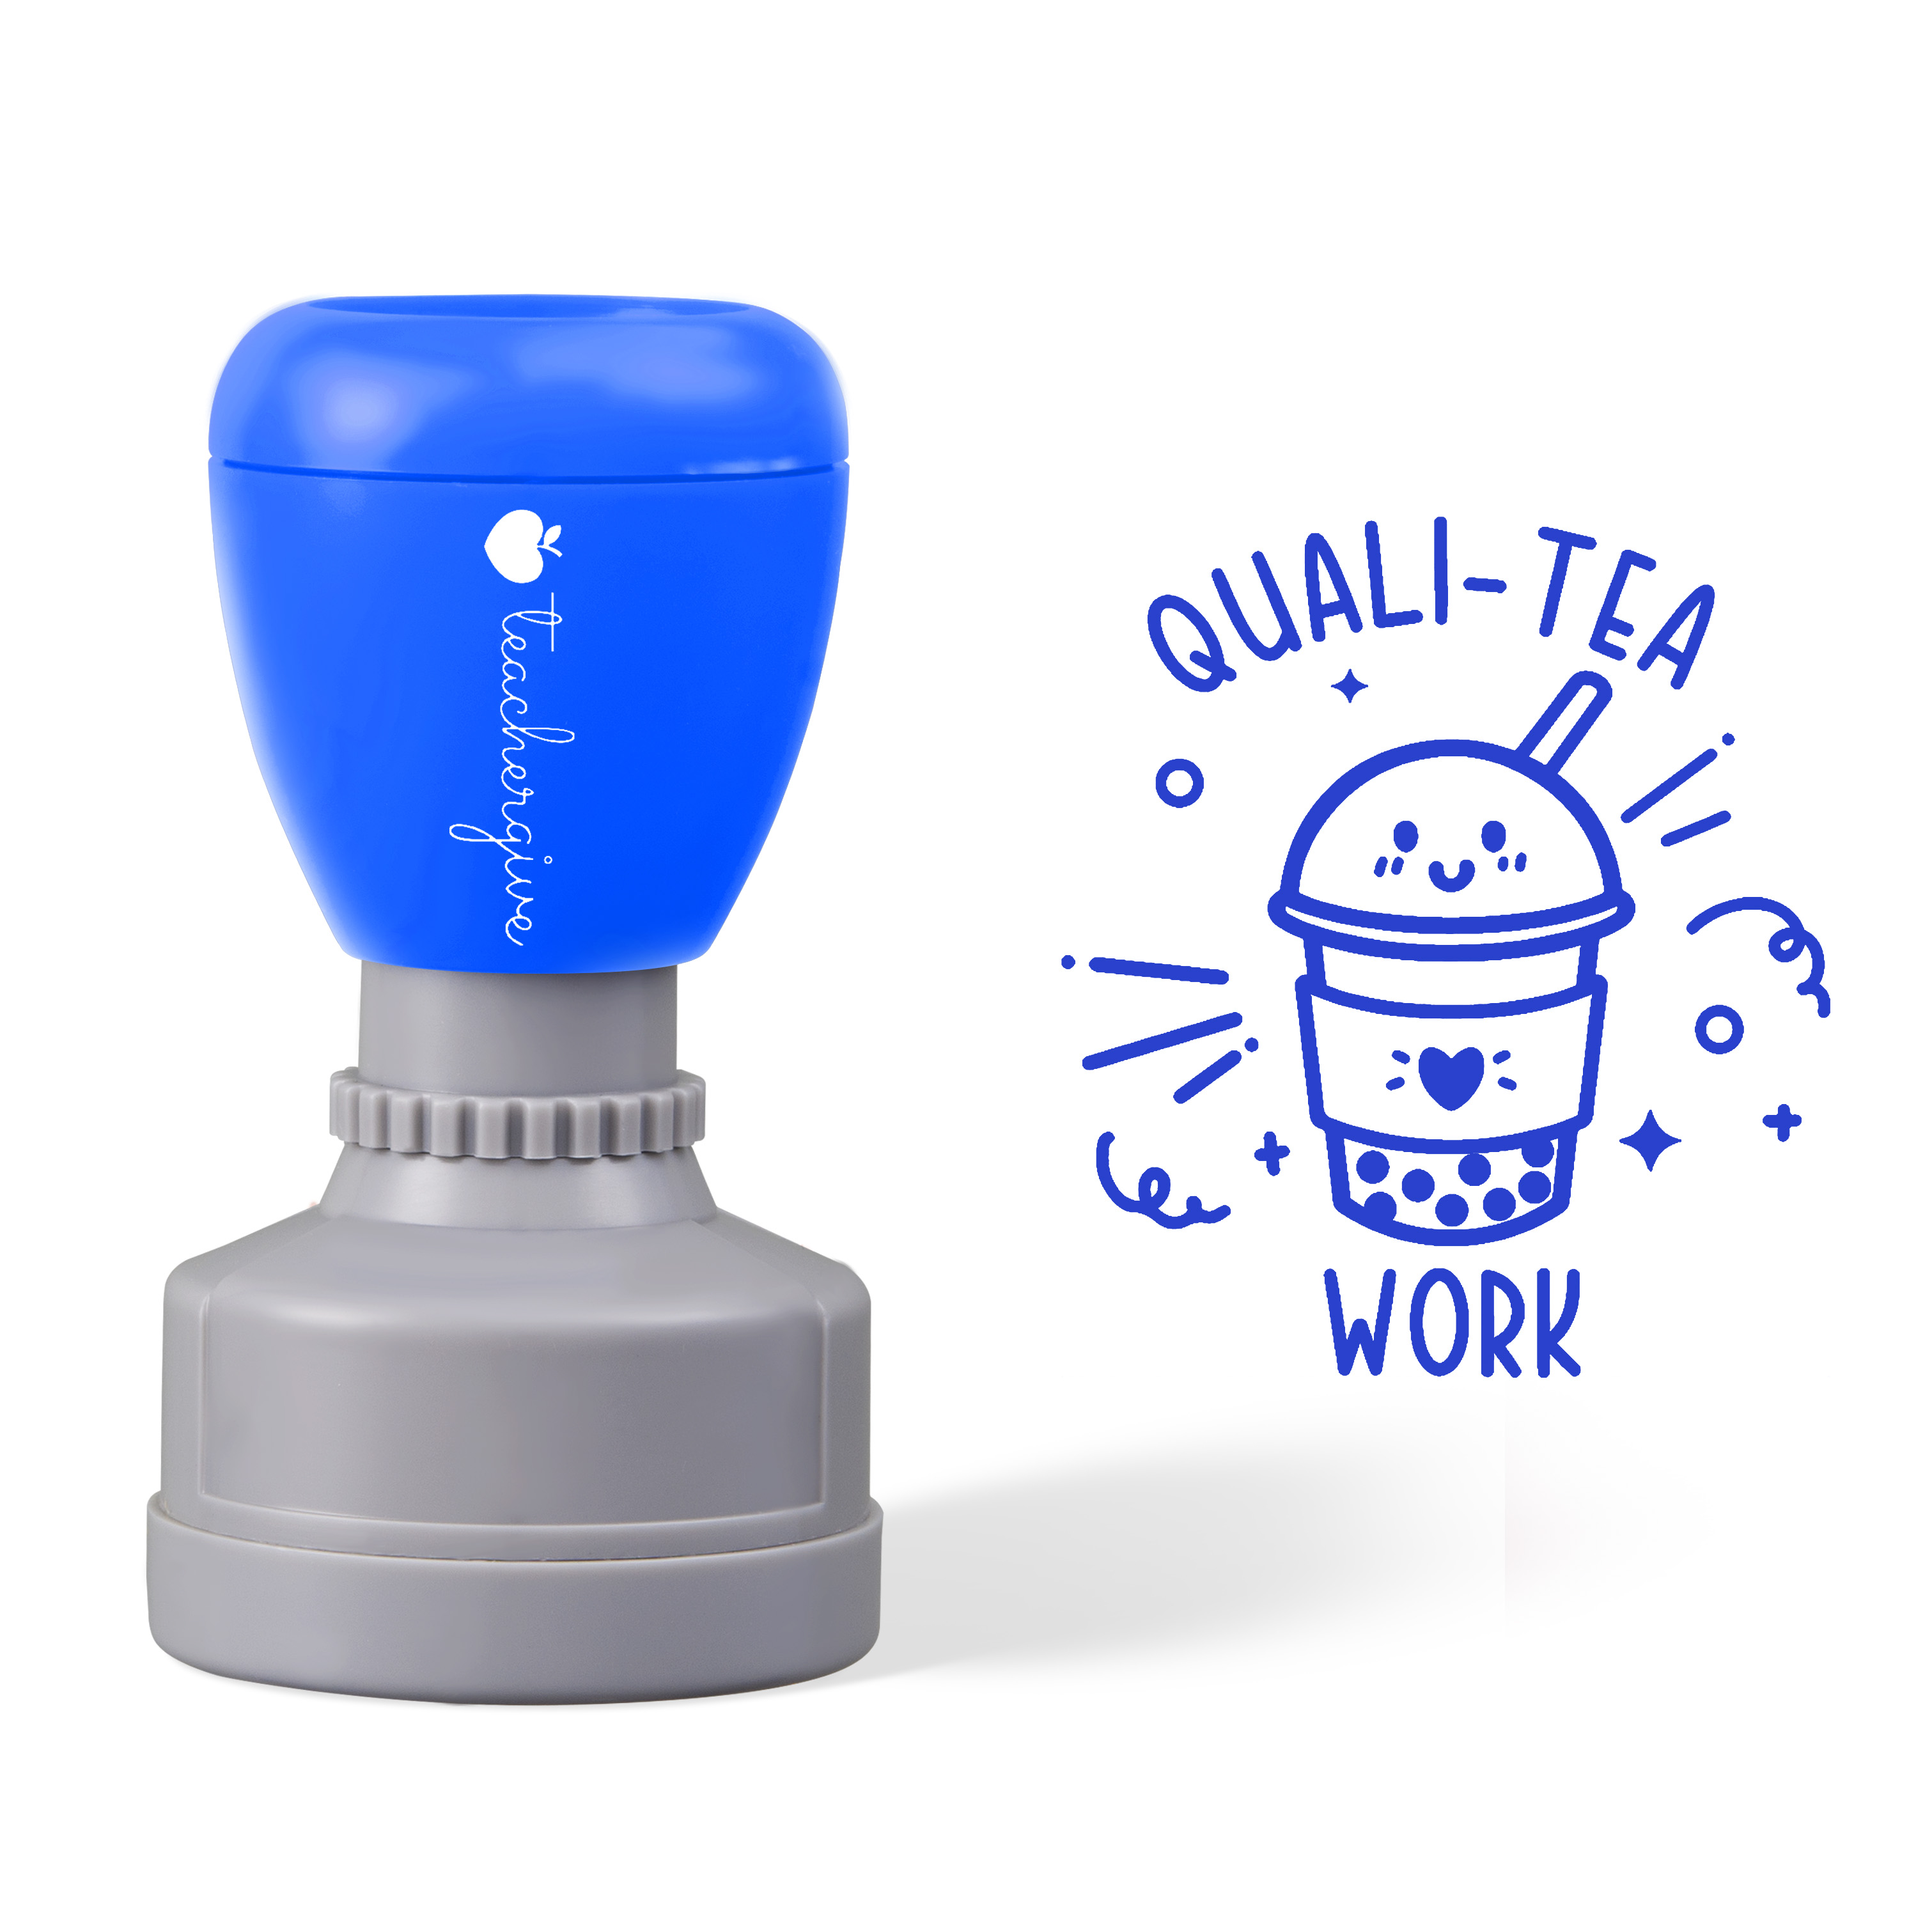 Quali-tea Work Stamp